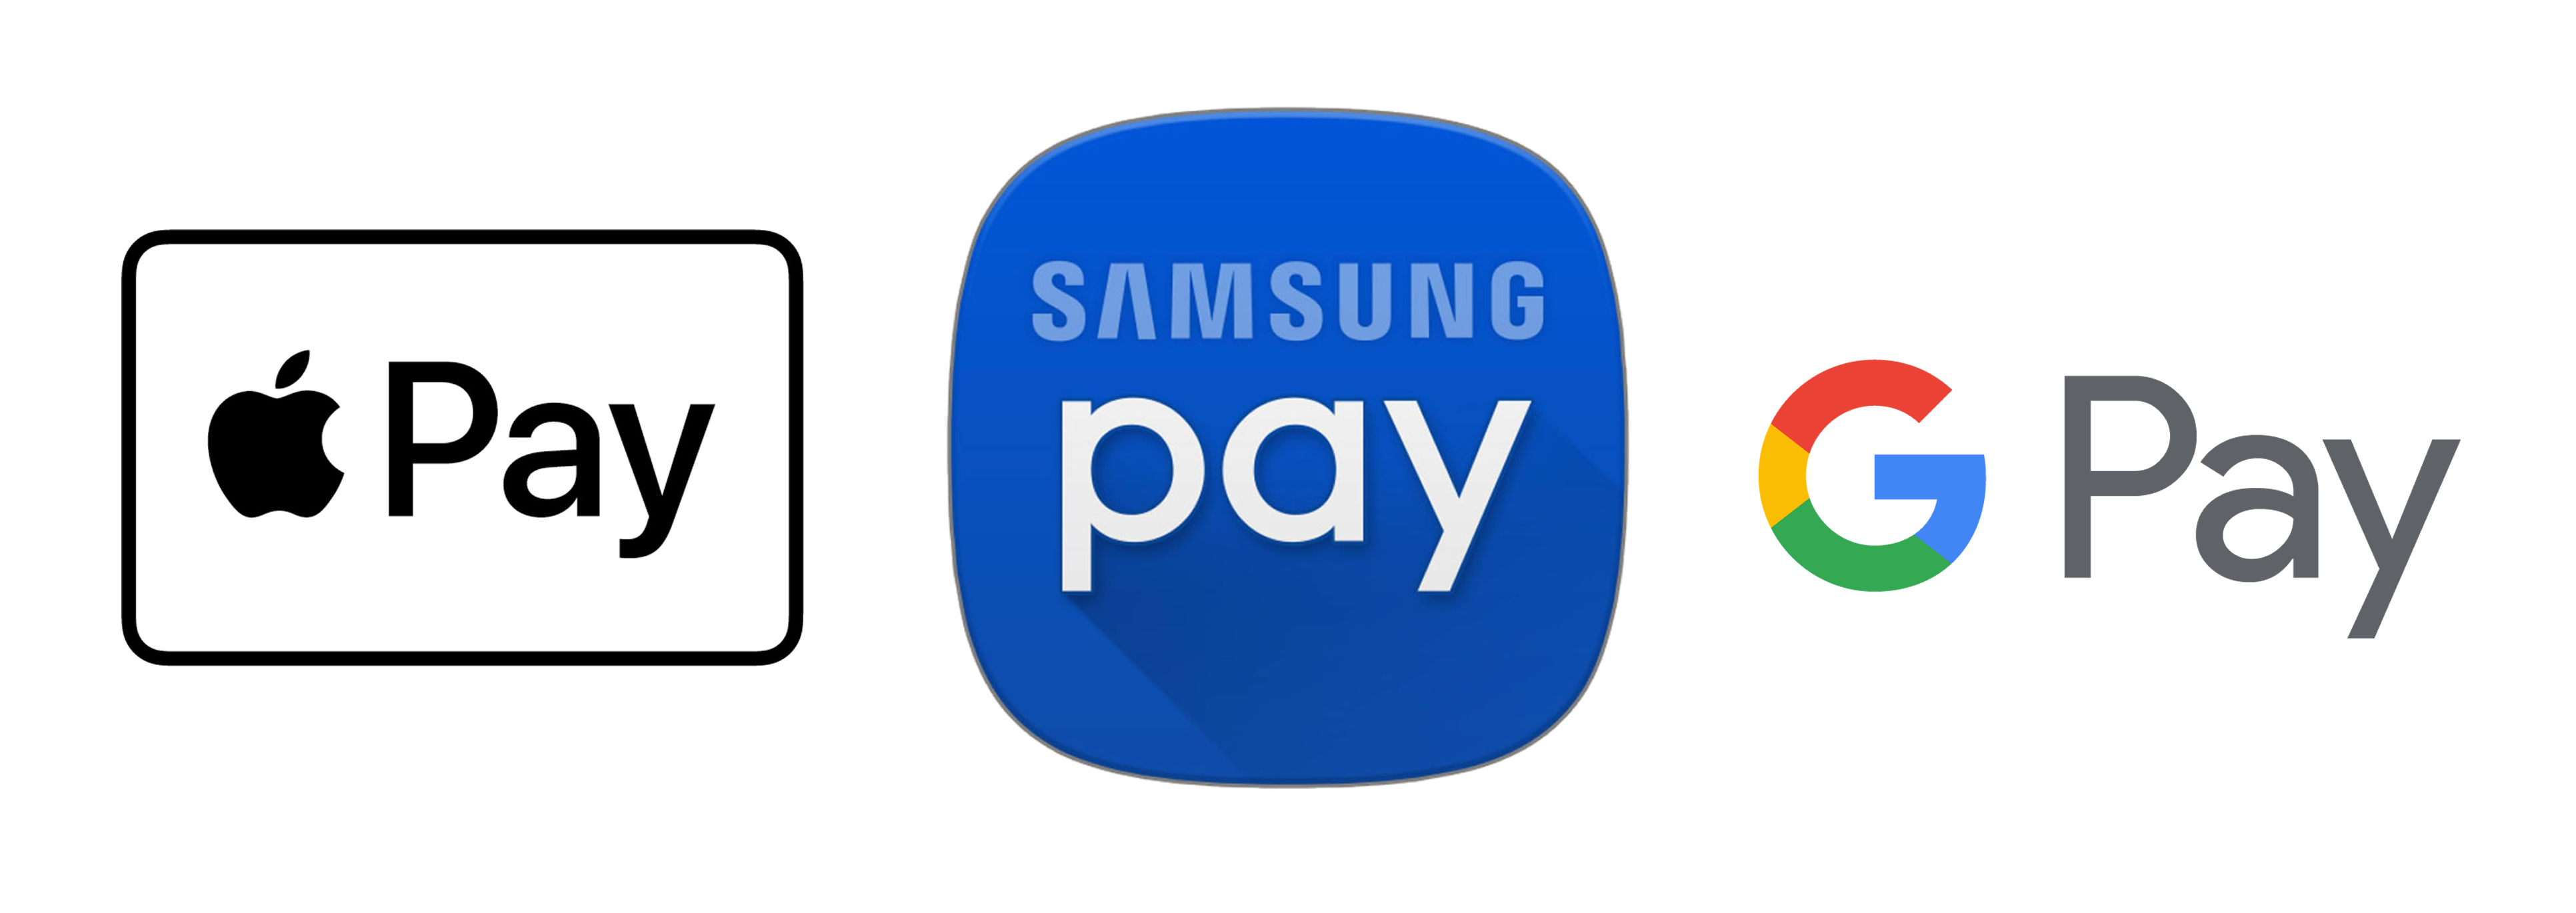 Google Pay Apple Pay Samsung Pay logos